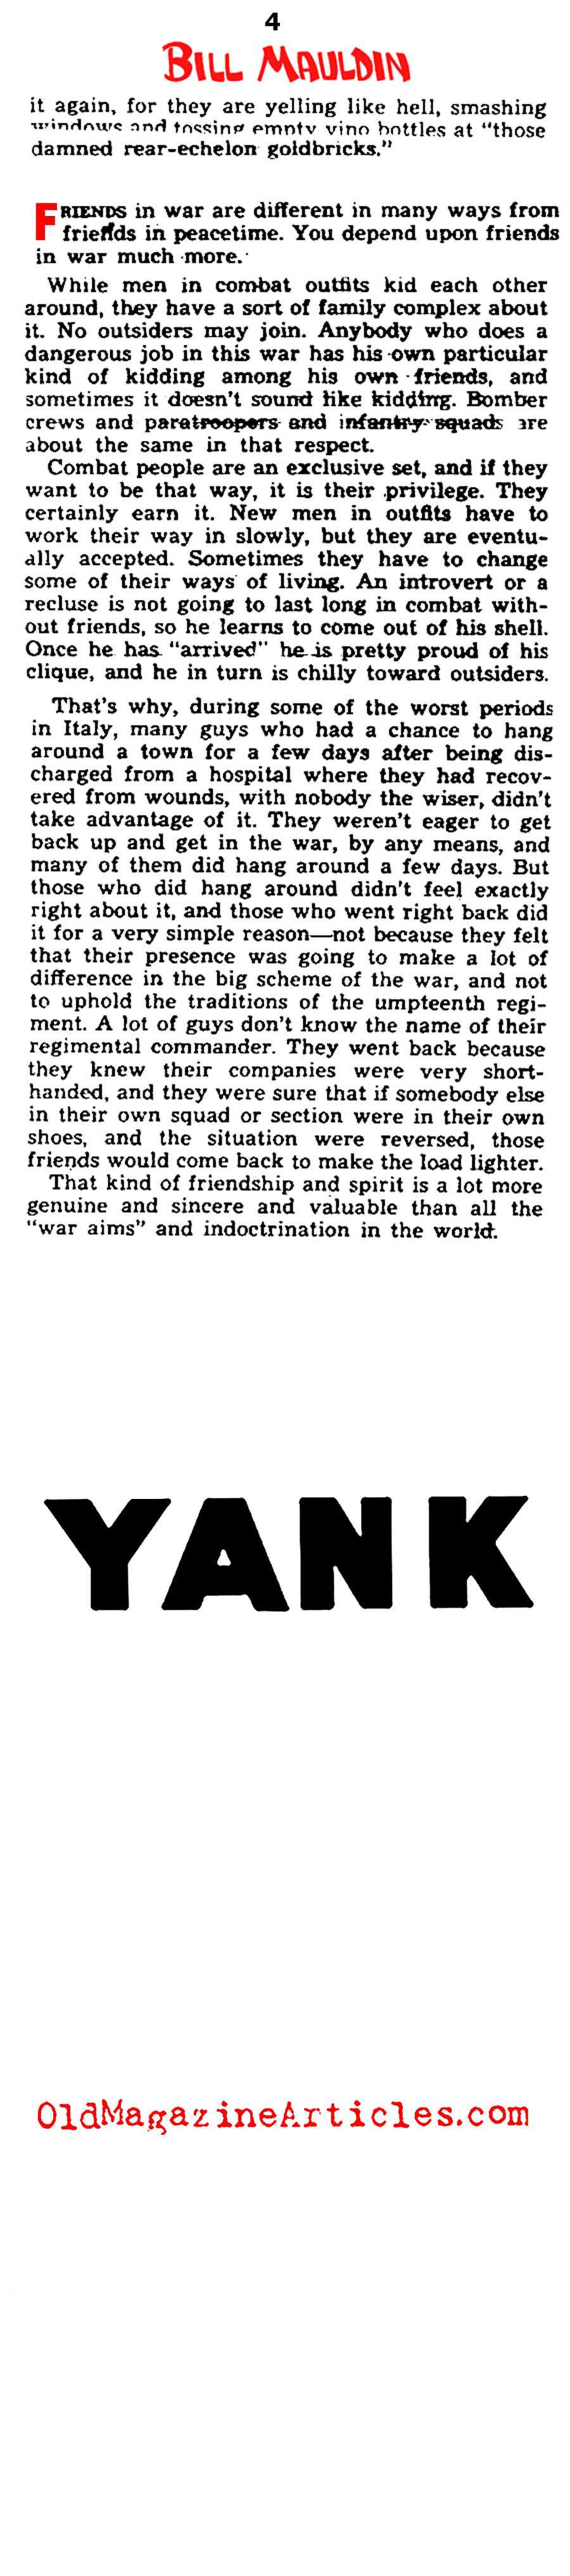 Bill Mauldin Of The Stars & Stripes (Yank Magazine, 1945)